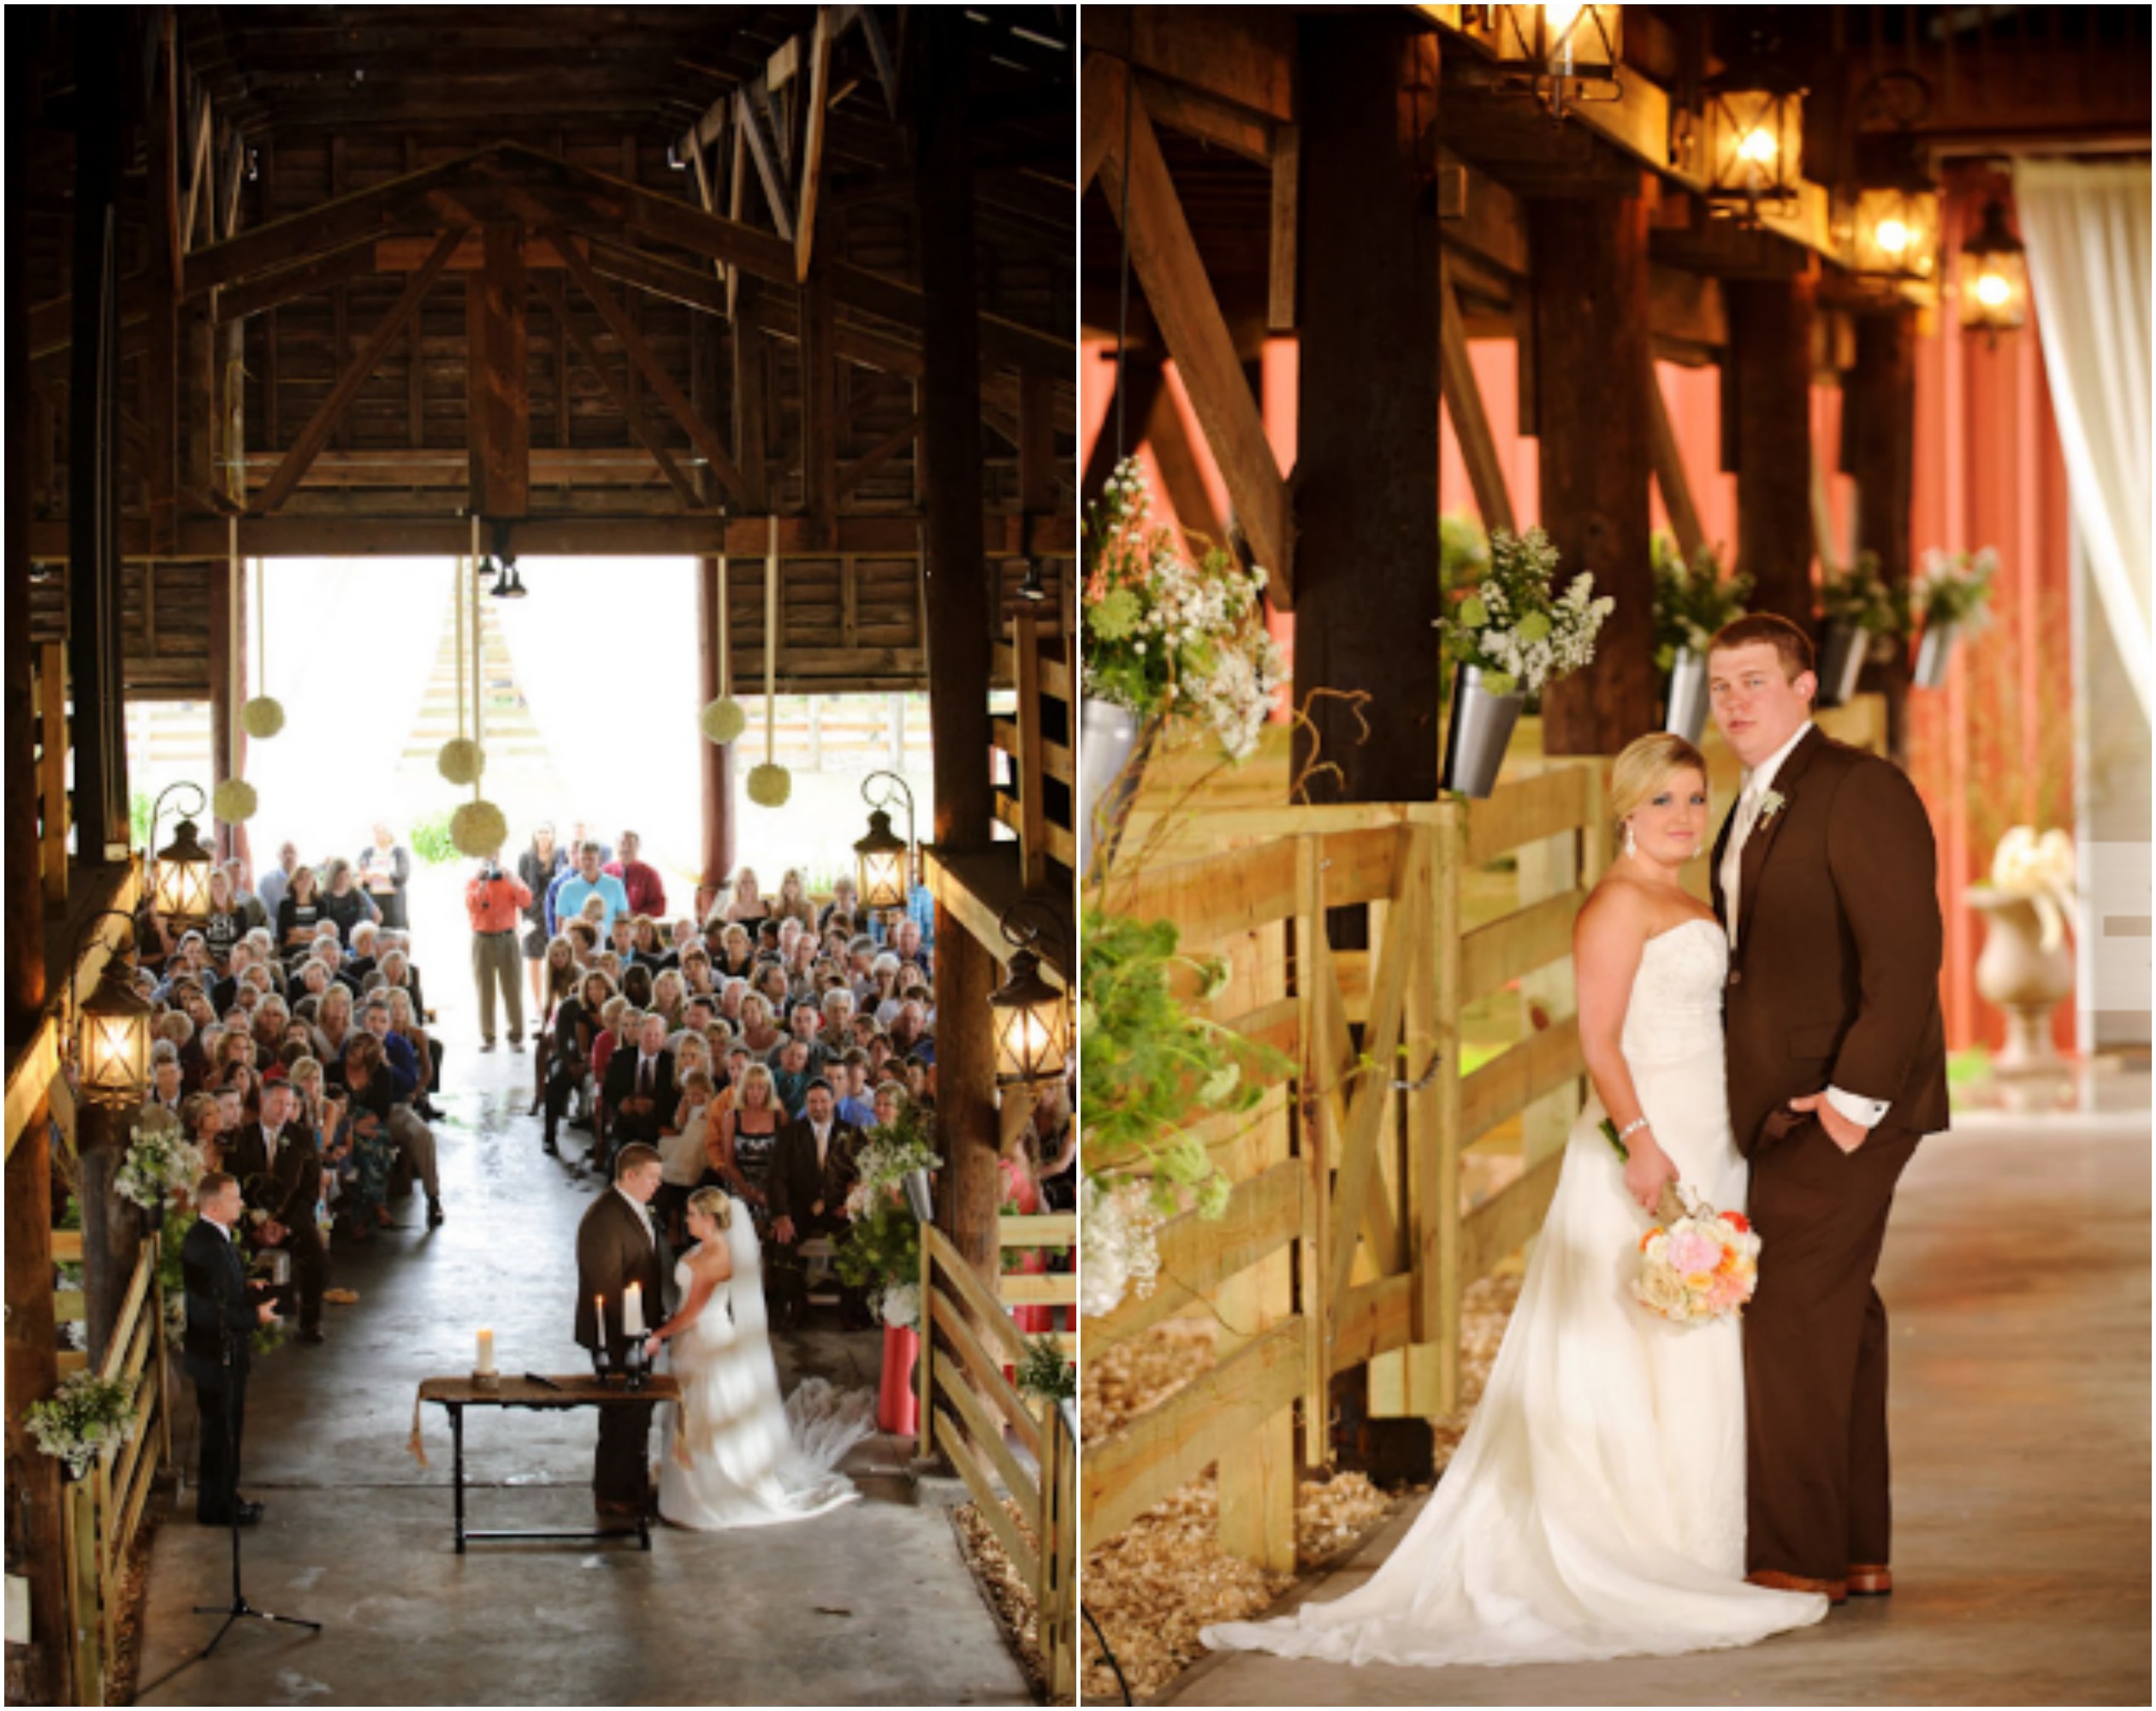 Barn Wedding Venues on Pinterest | Barn Plans, Barn Weddings and Barns